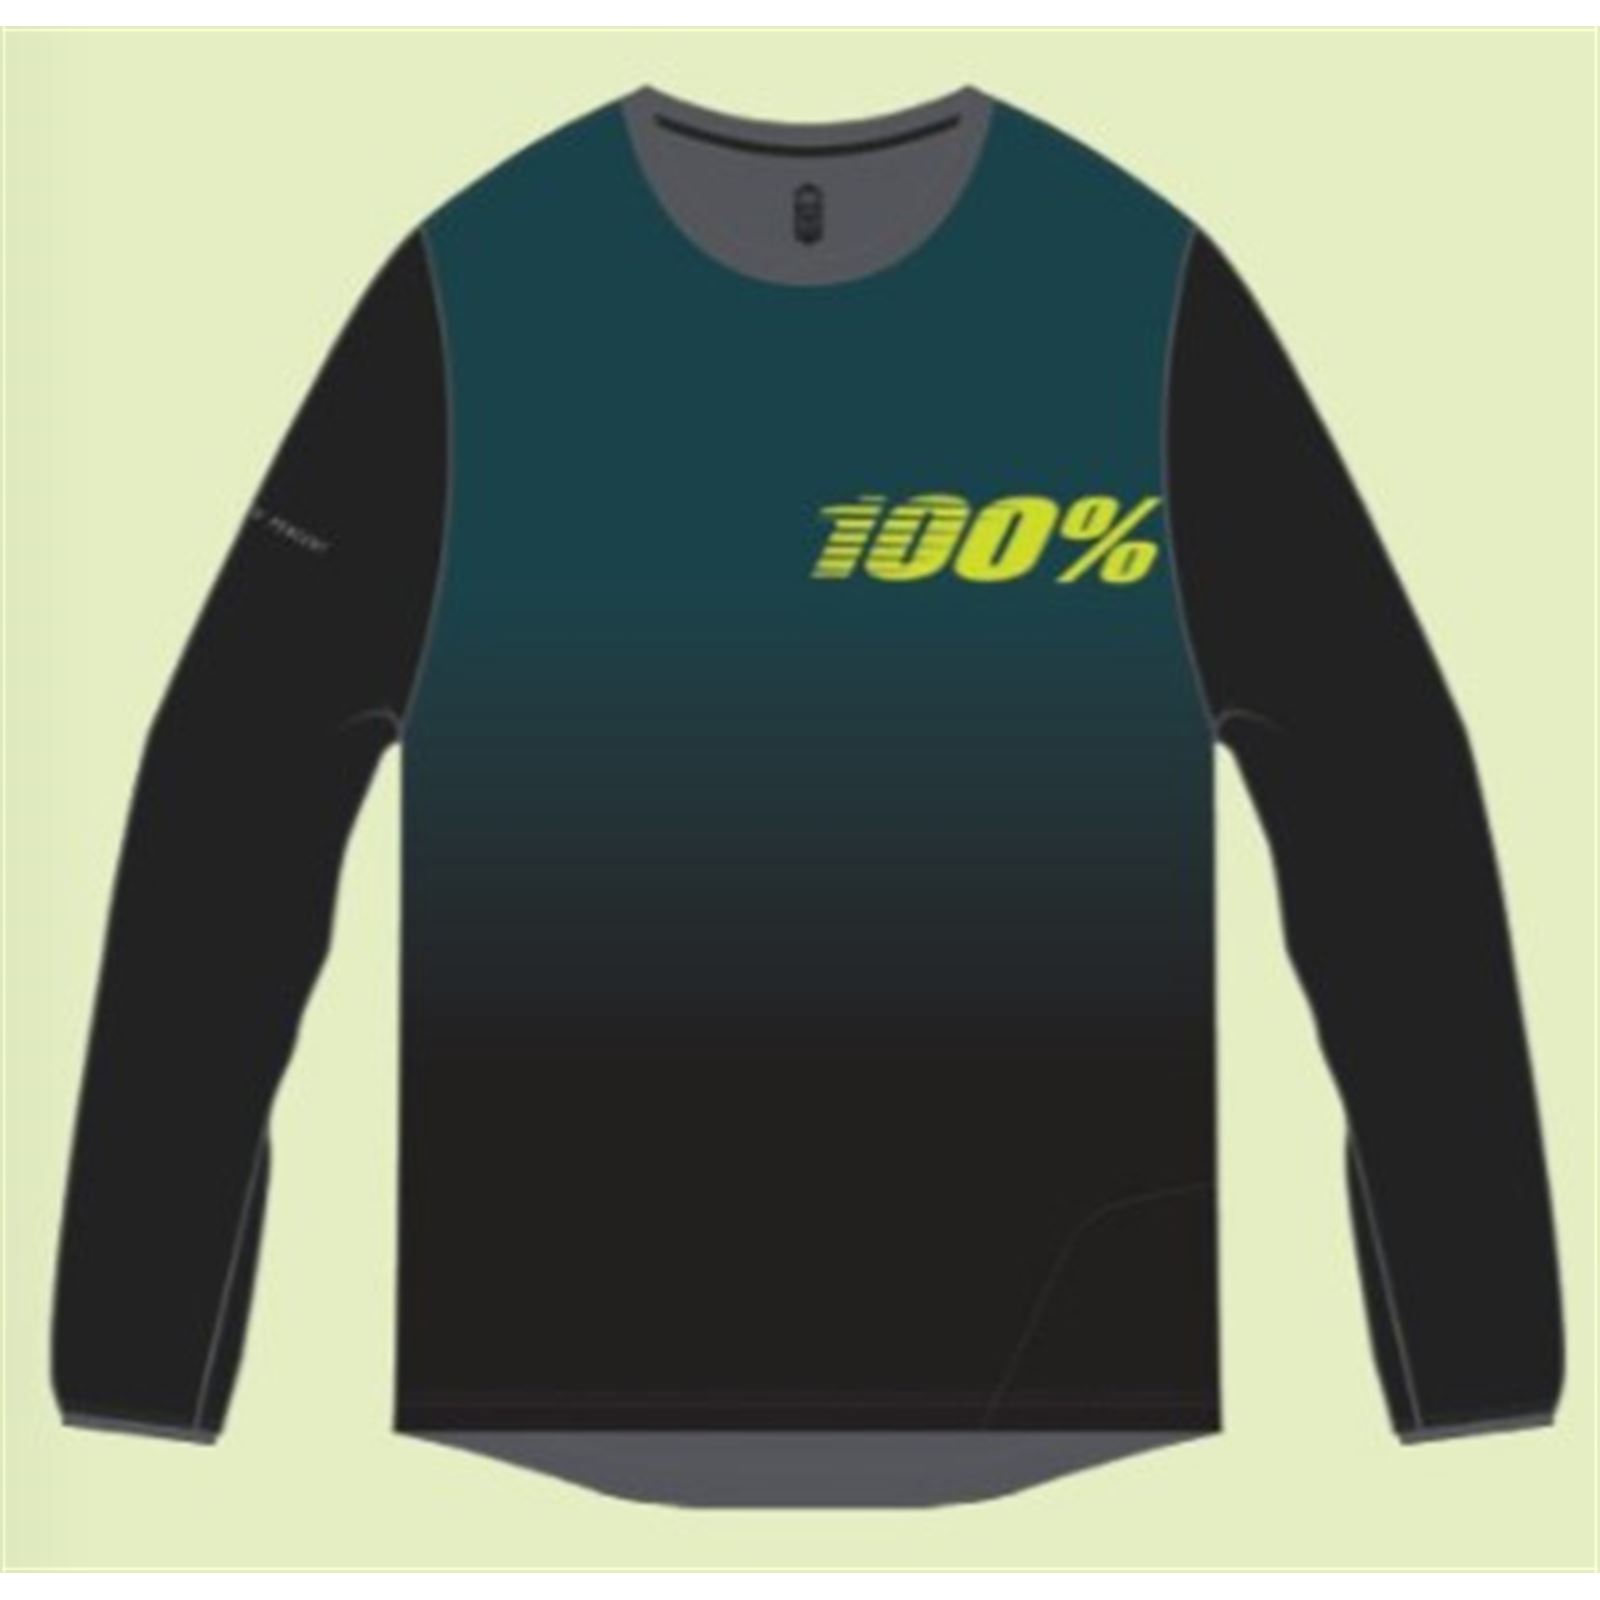 100% Ridecamp Long Sleeve Jersey - Teal/Black - Medium